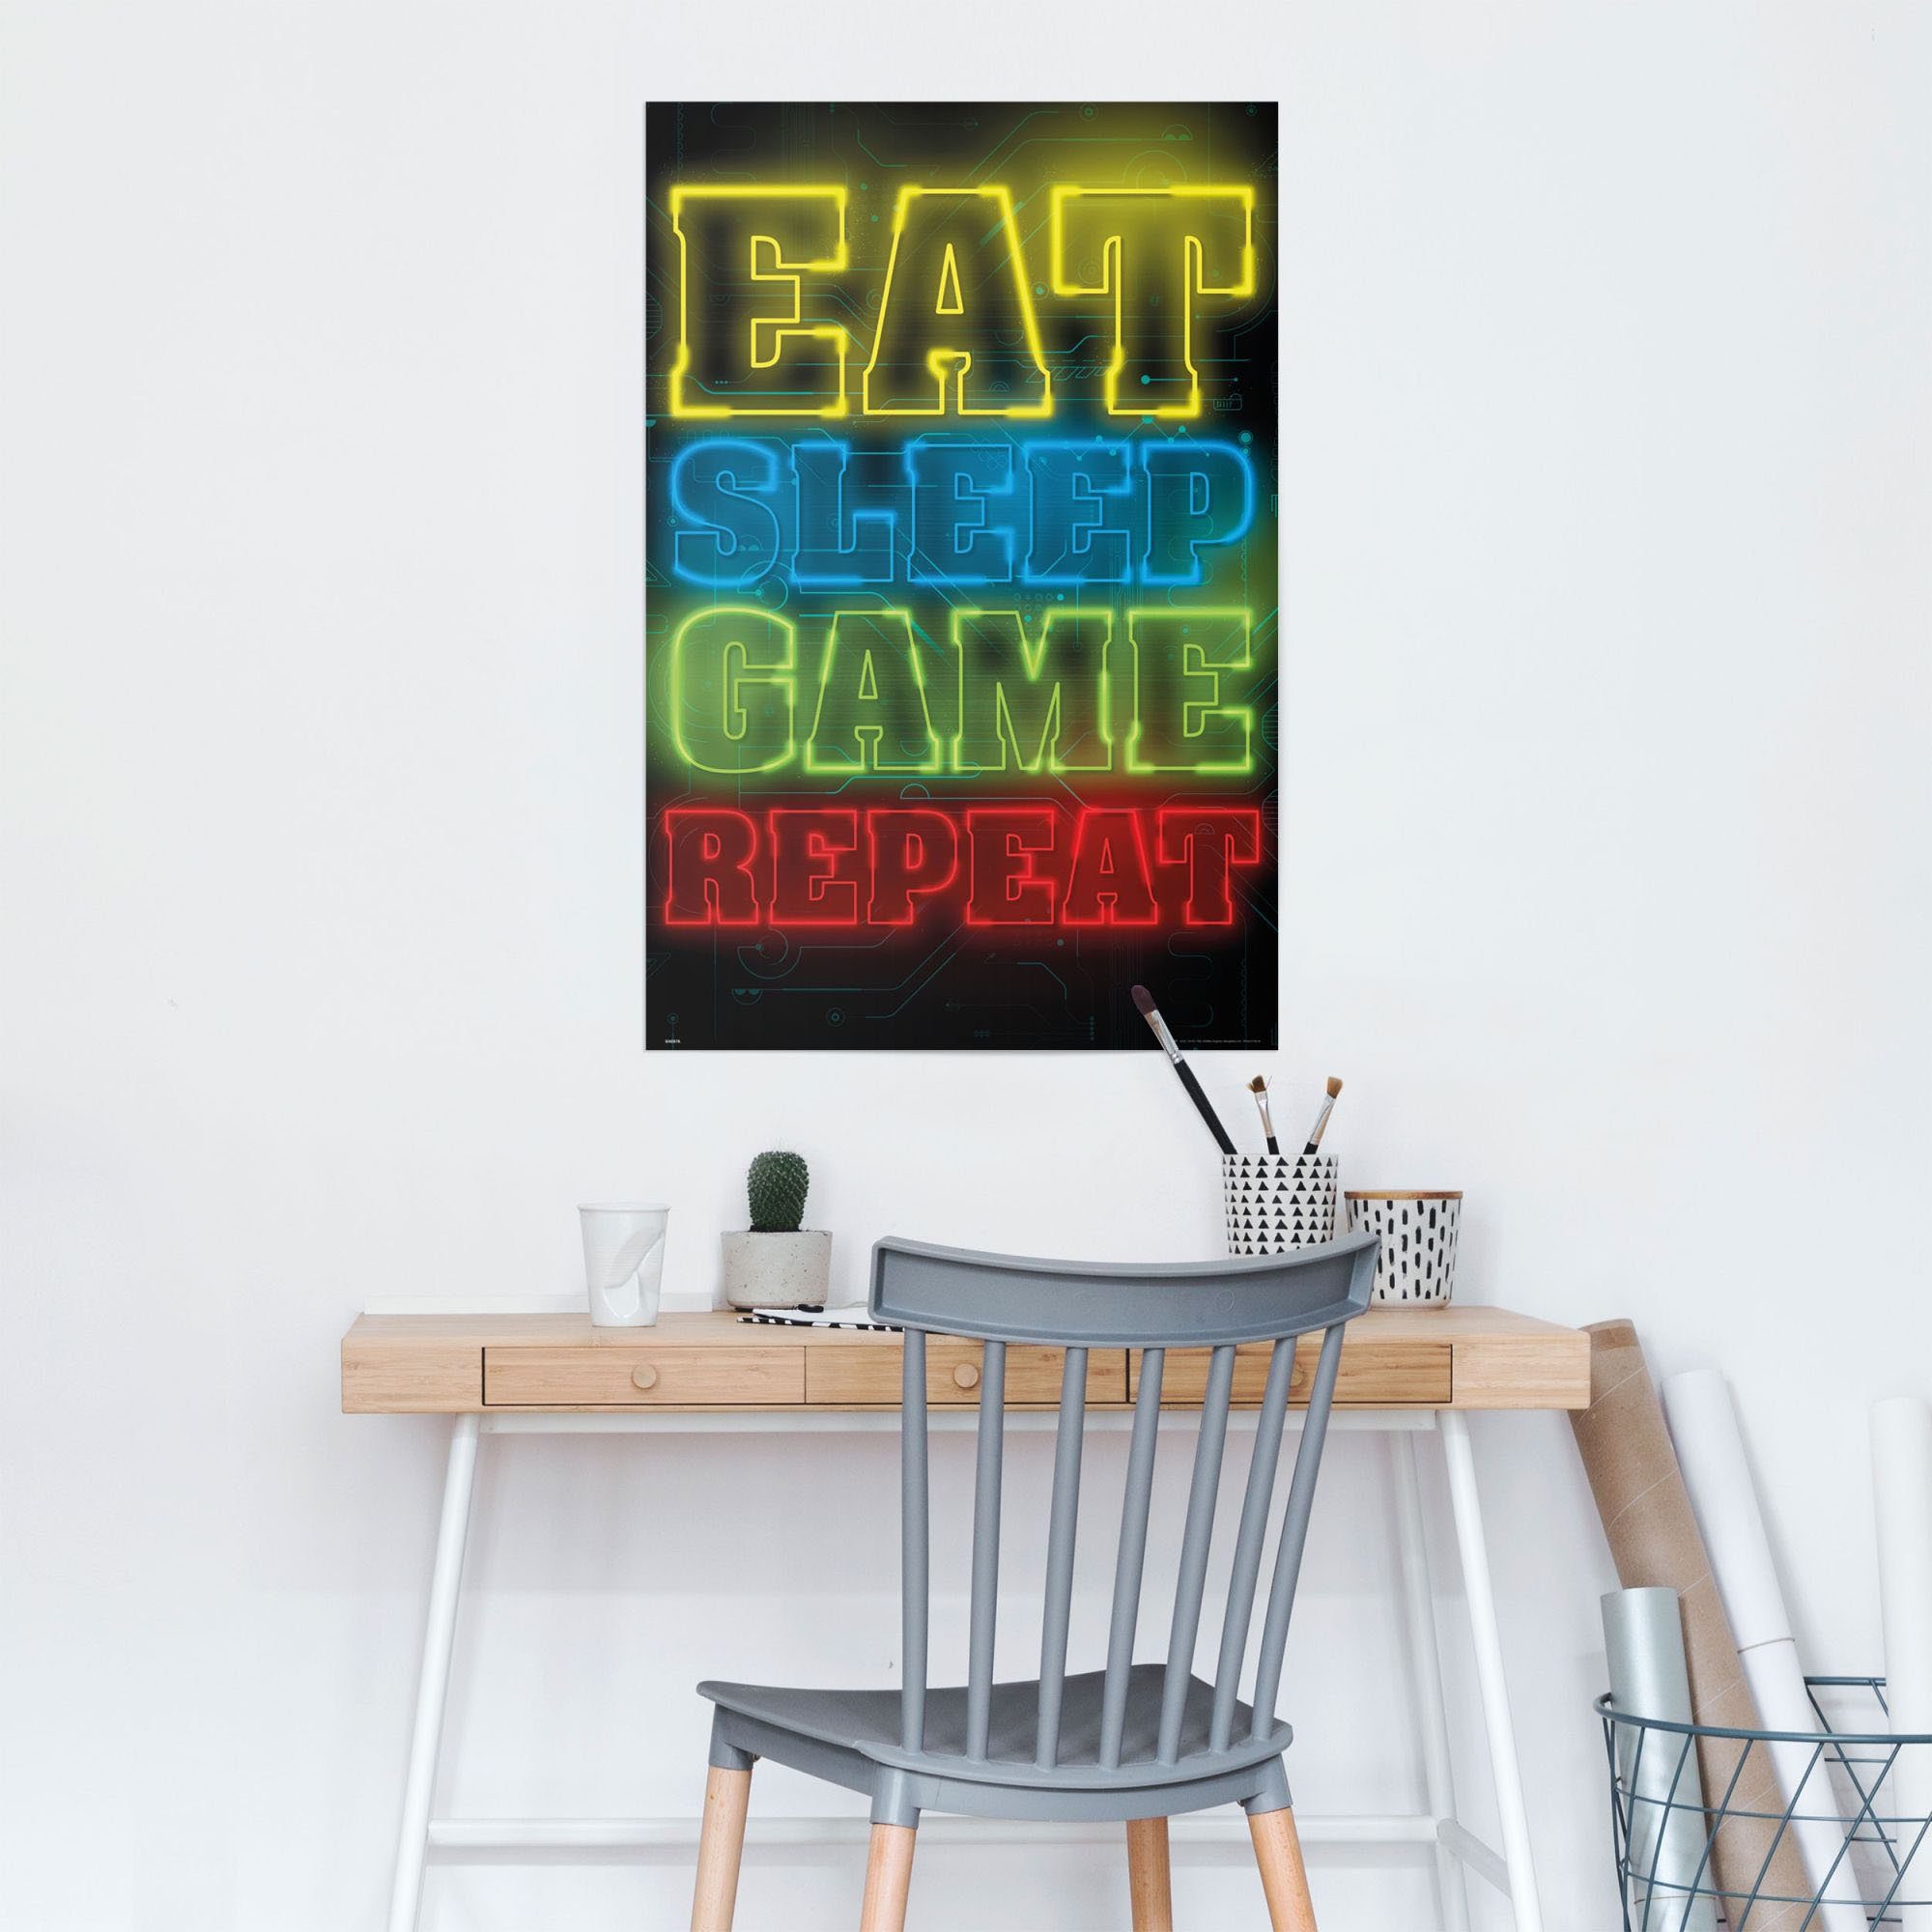 repeat, Spiele Poster Zocken sleep St) (1 game Eat Poster Reinders!